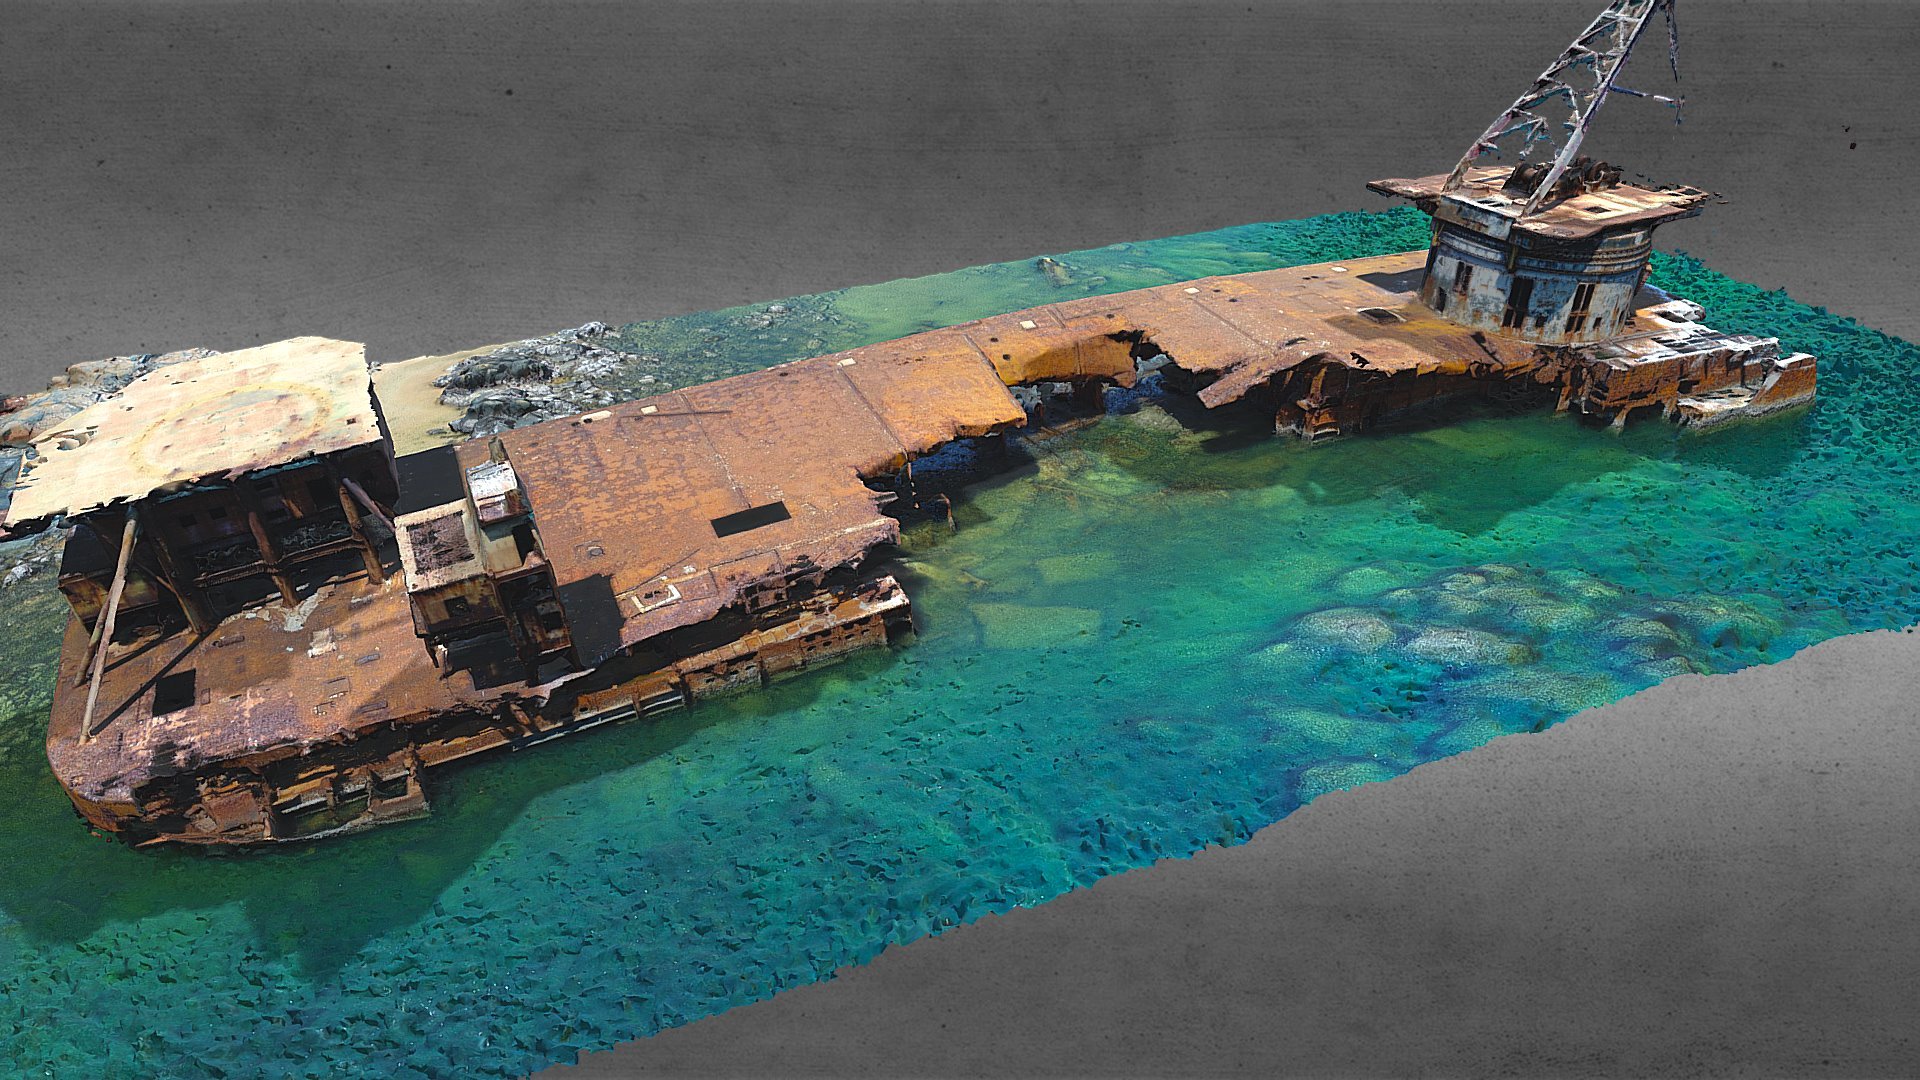 McDermott Barge Shipwreck, Dampier Archipelago